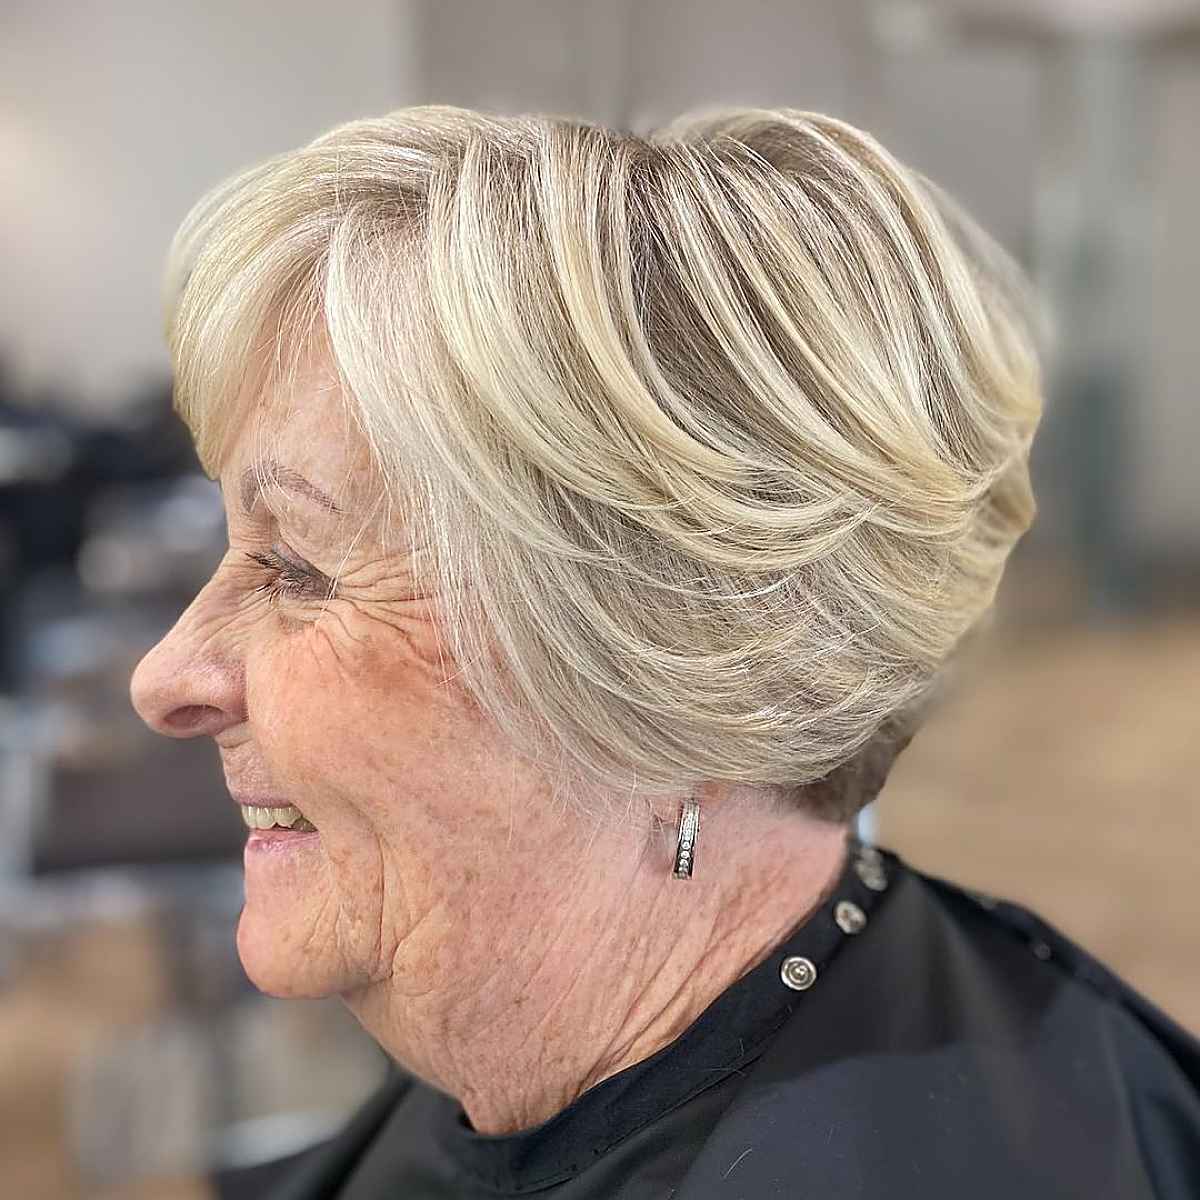 The Dorothy Hamill inspired wedge haircut